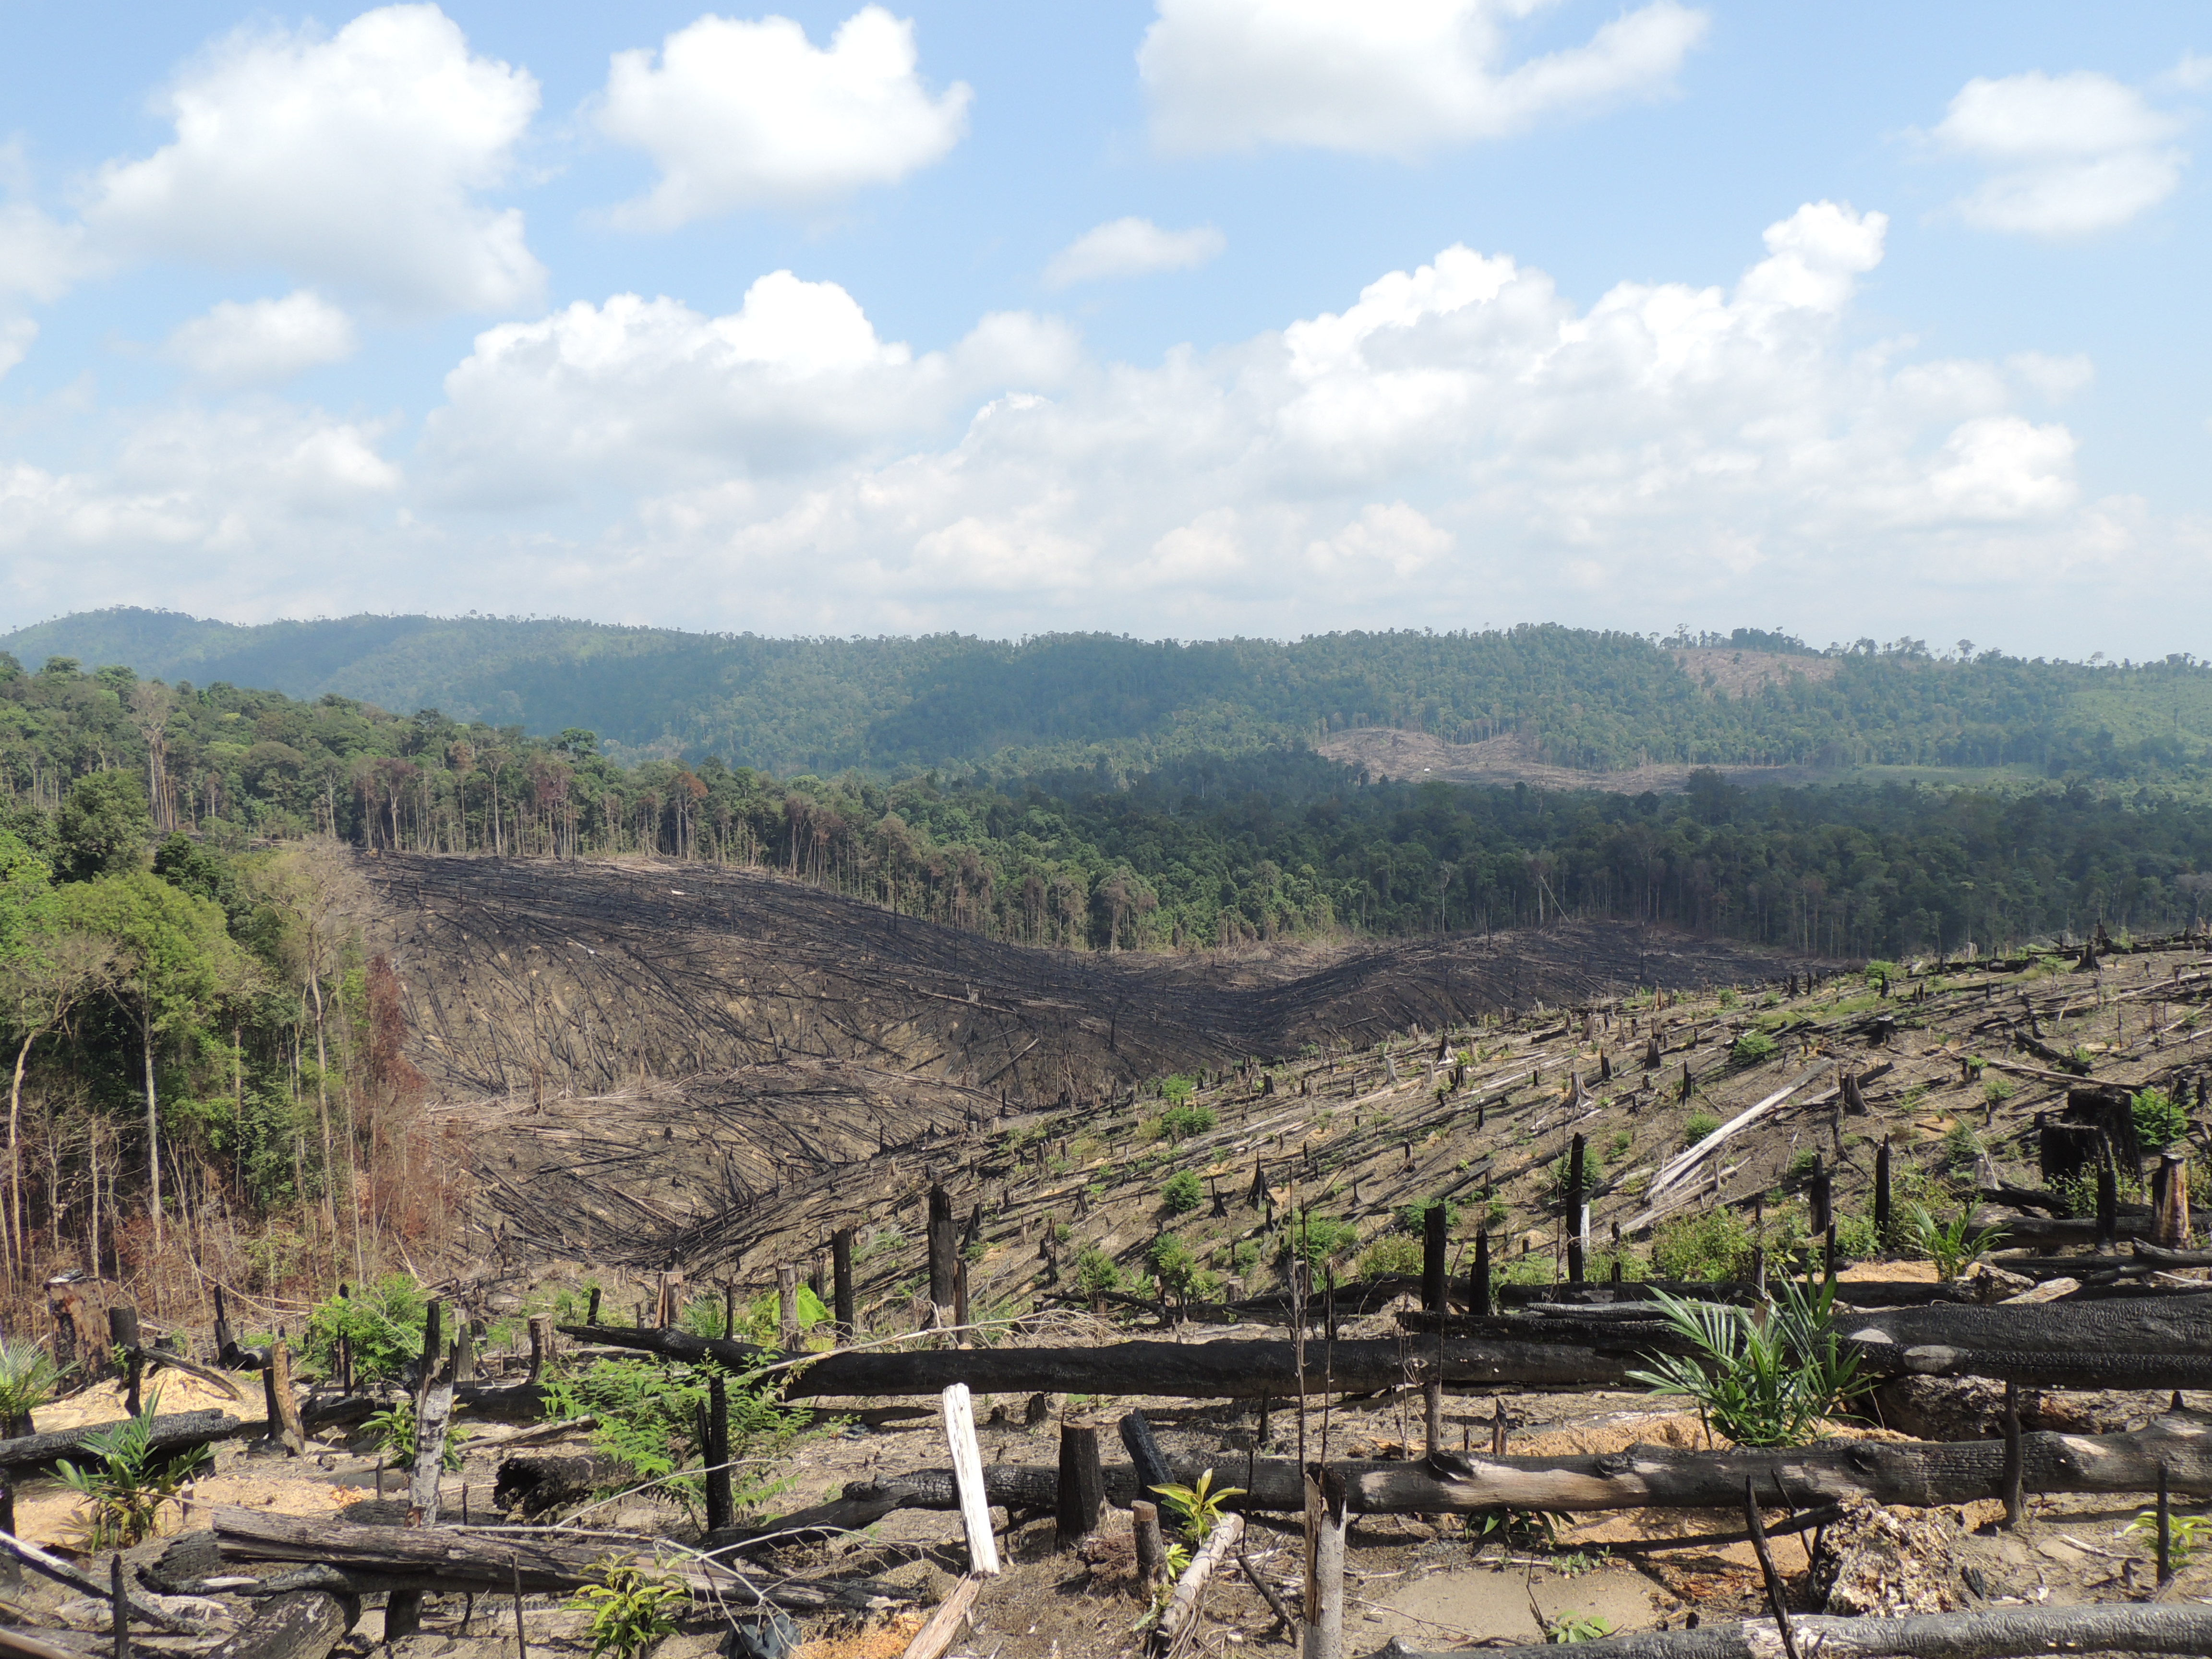 Recently burnt area inside Rimbang Baling